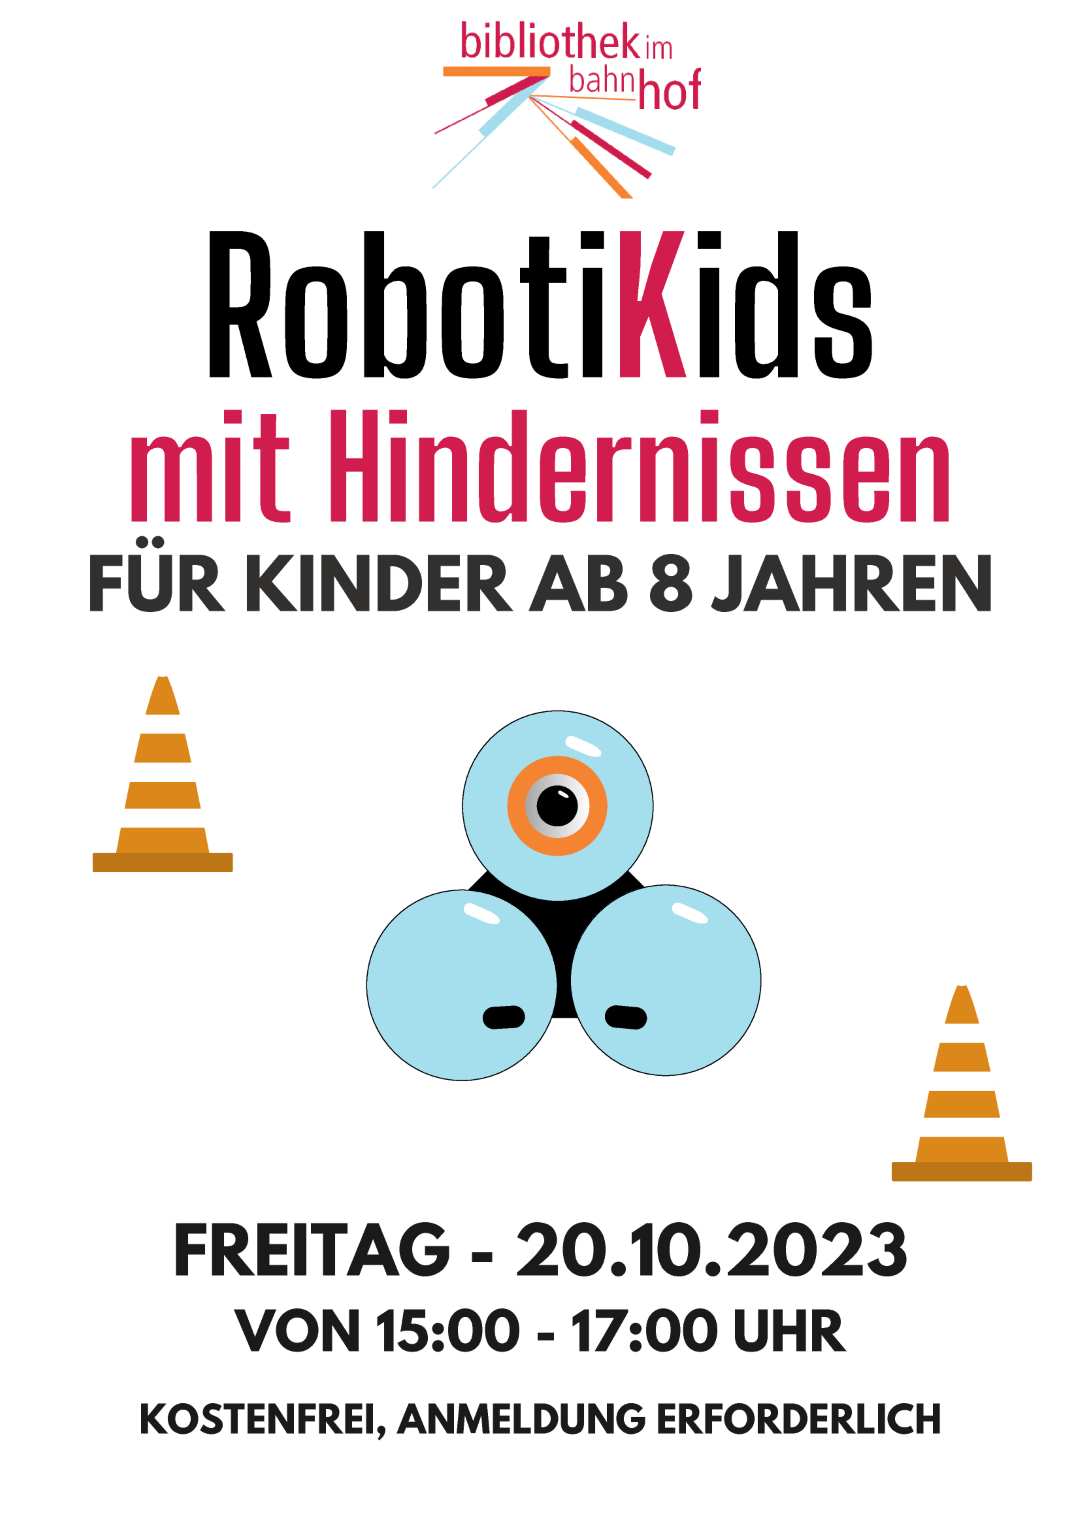 Robotic und Coding for Kids